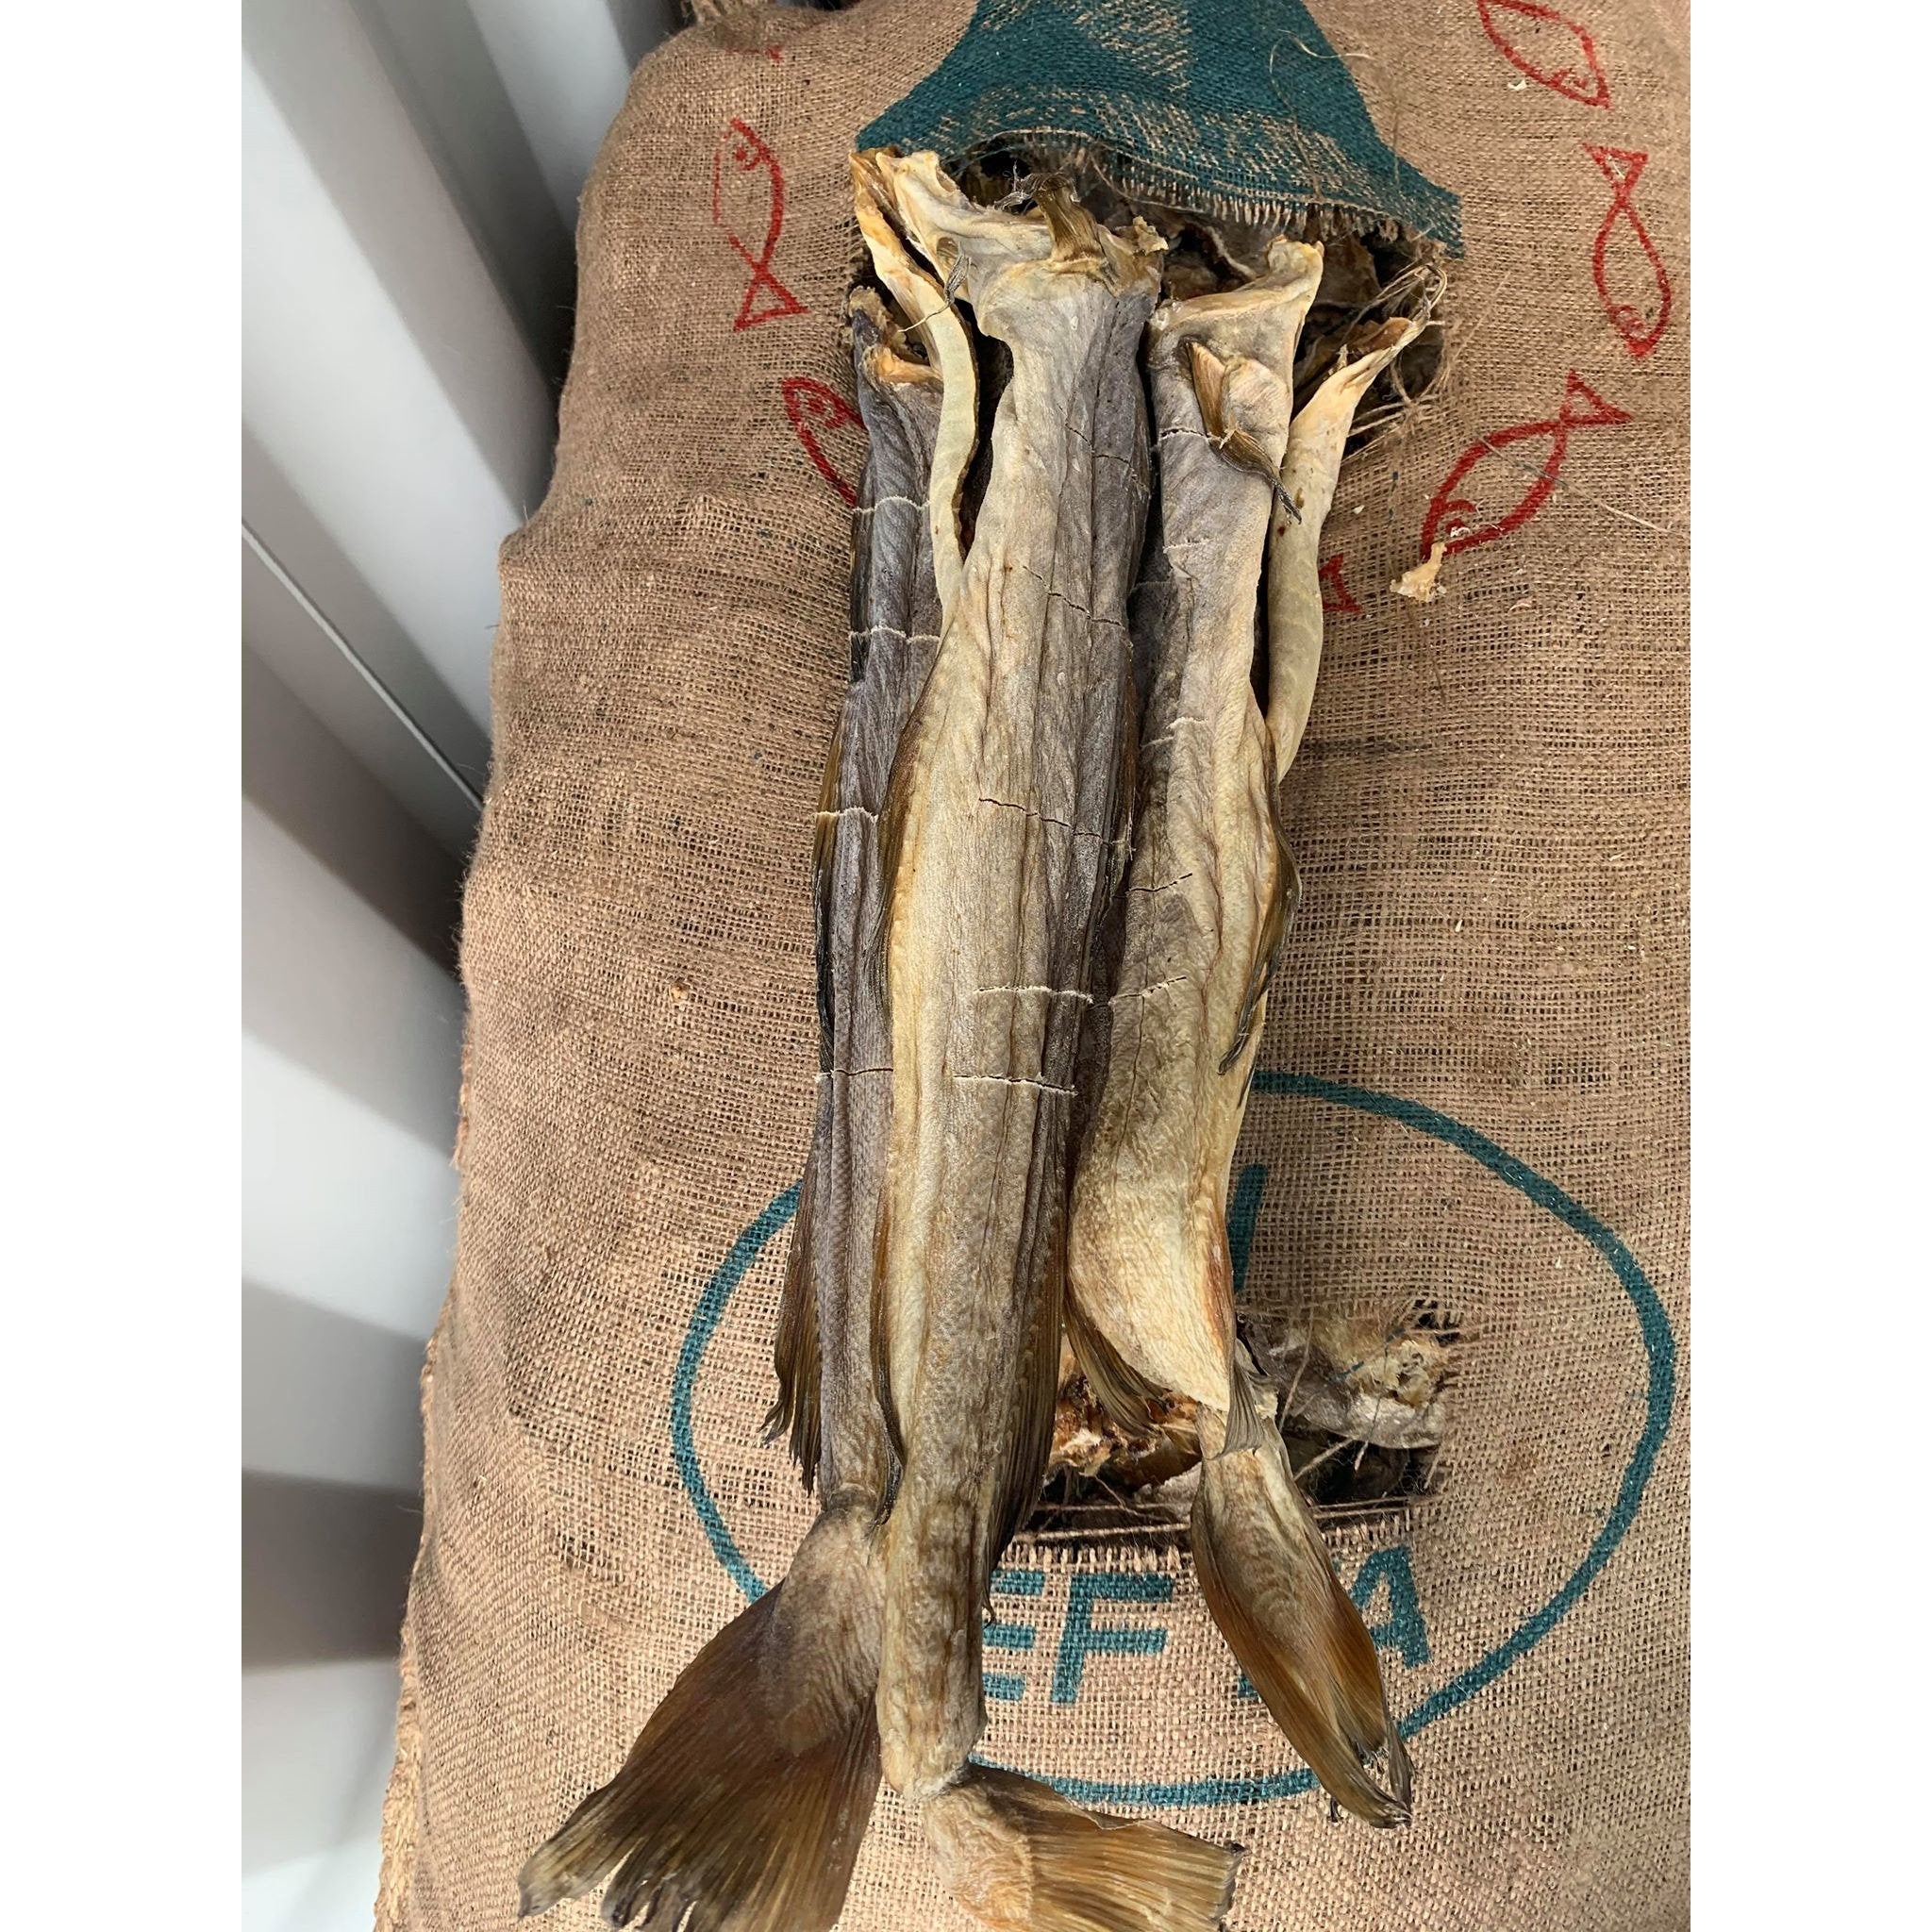 Africas Finest Stockfish Cod, 250g